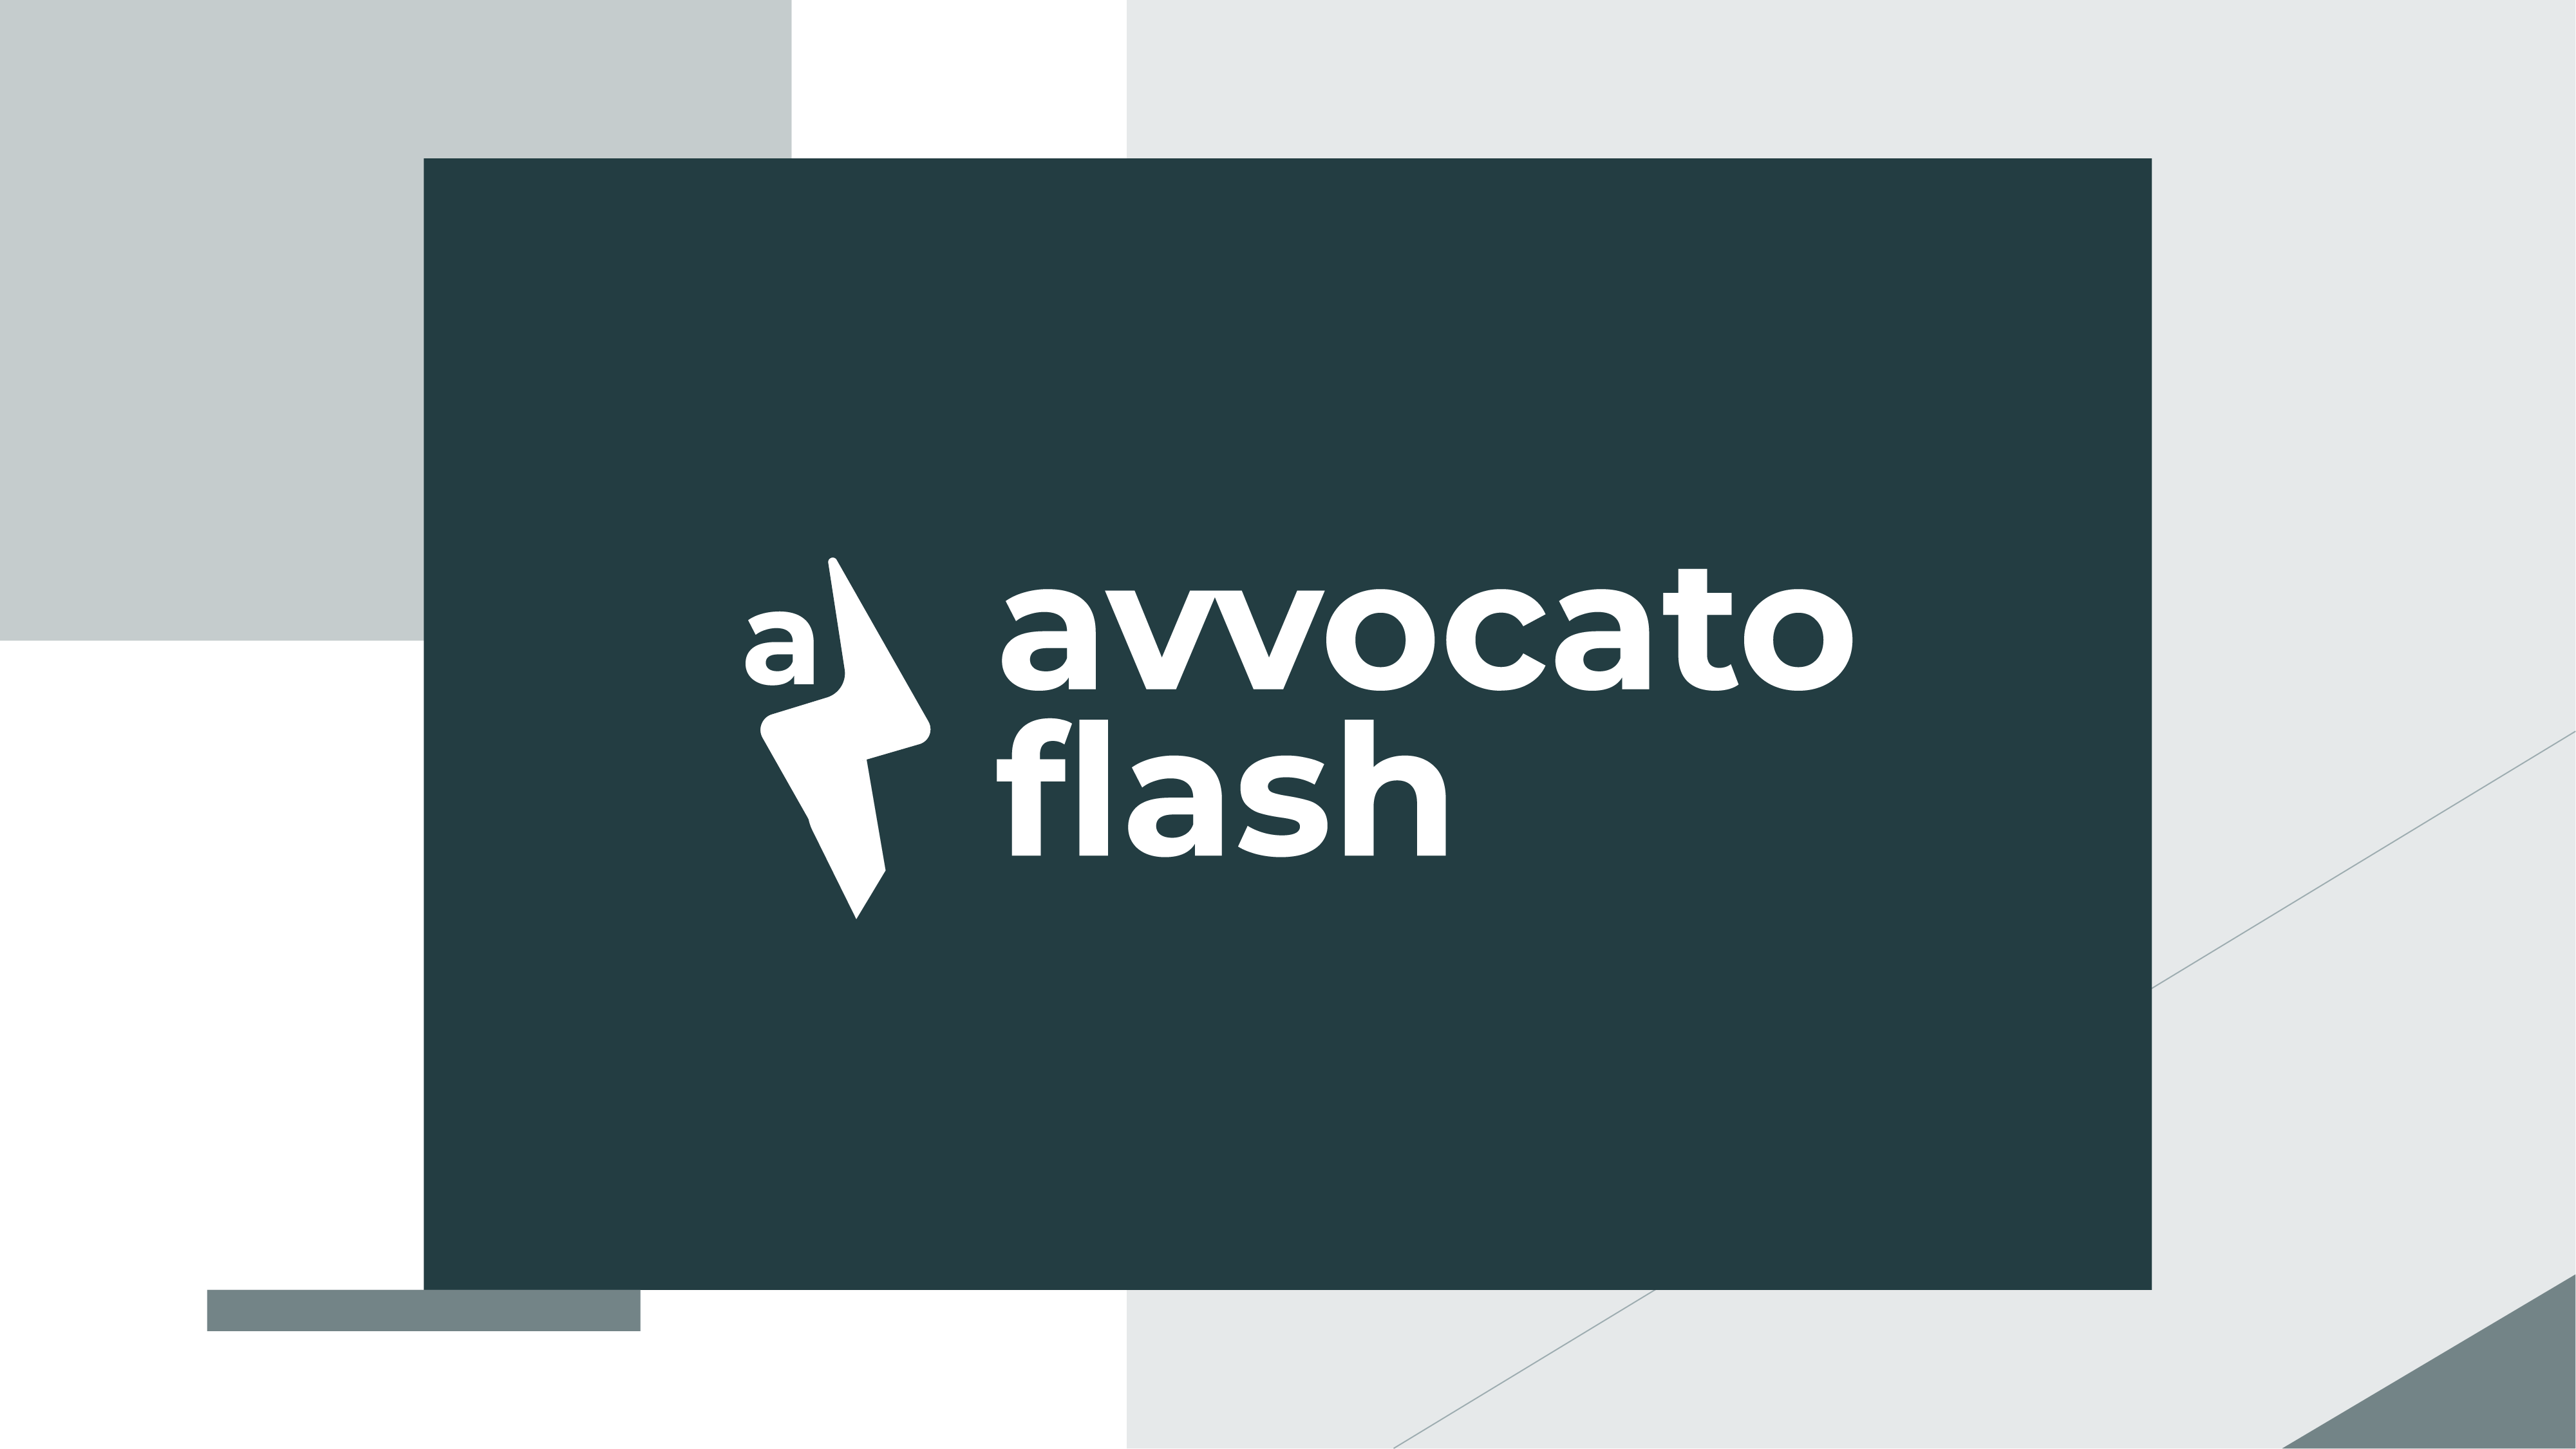 AvvocatoFlash scored a €594K investment round